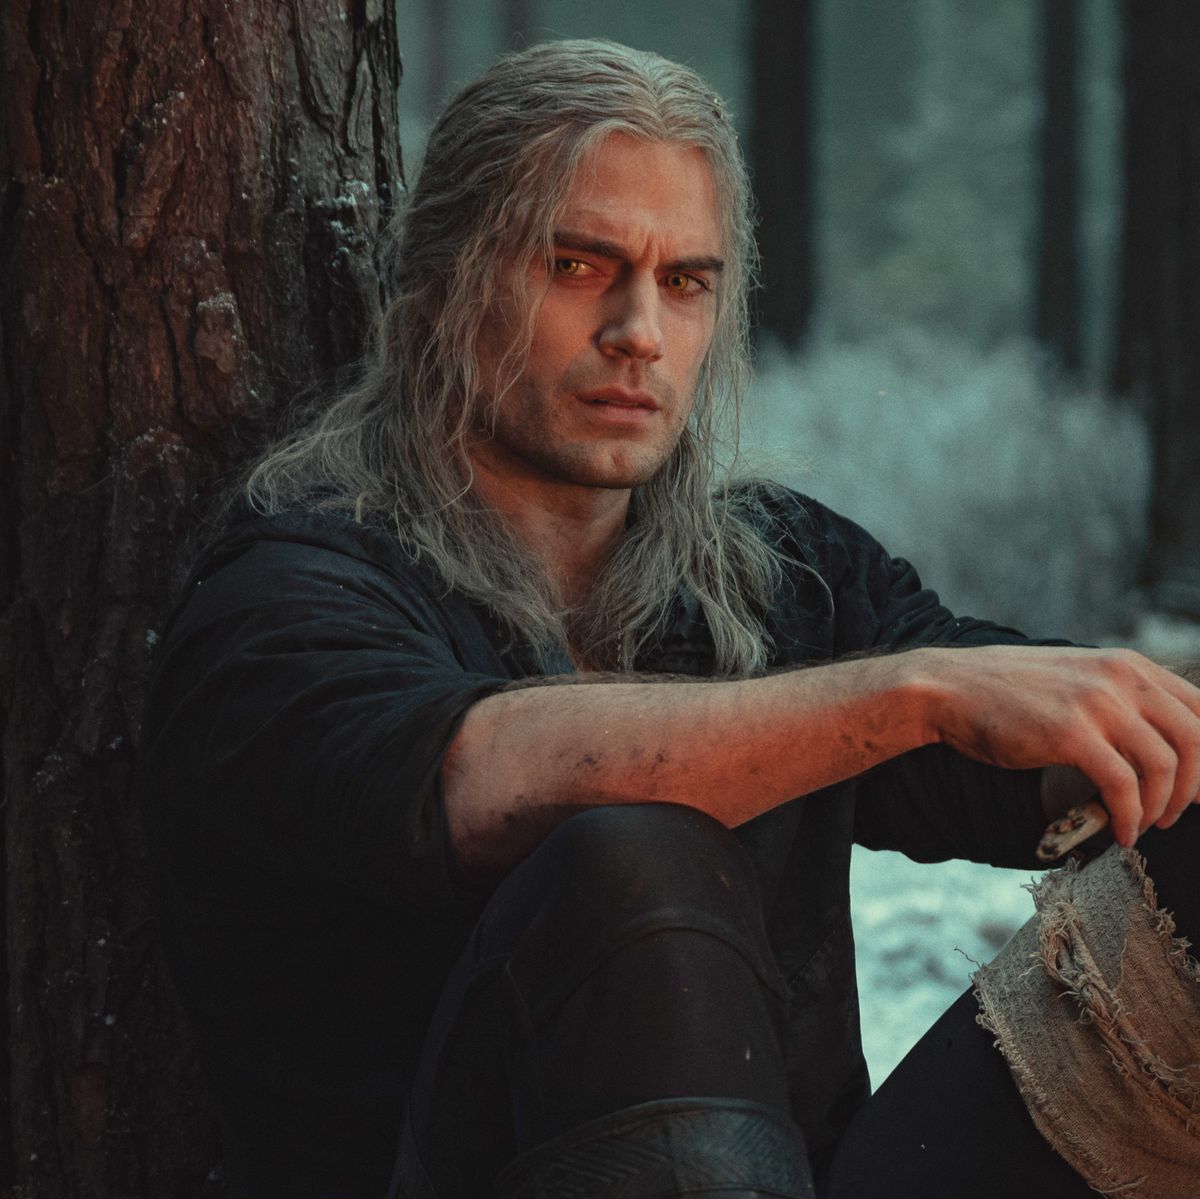 Henry Cavill's last Witcher scene sets up Liam Hemsworth's Geralt